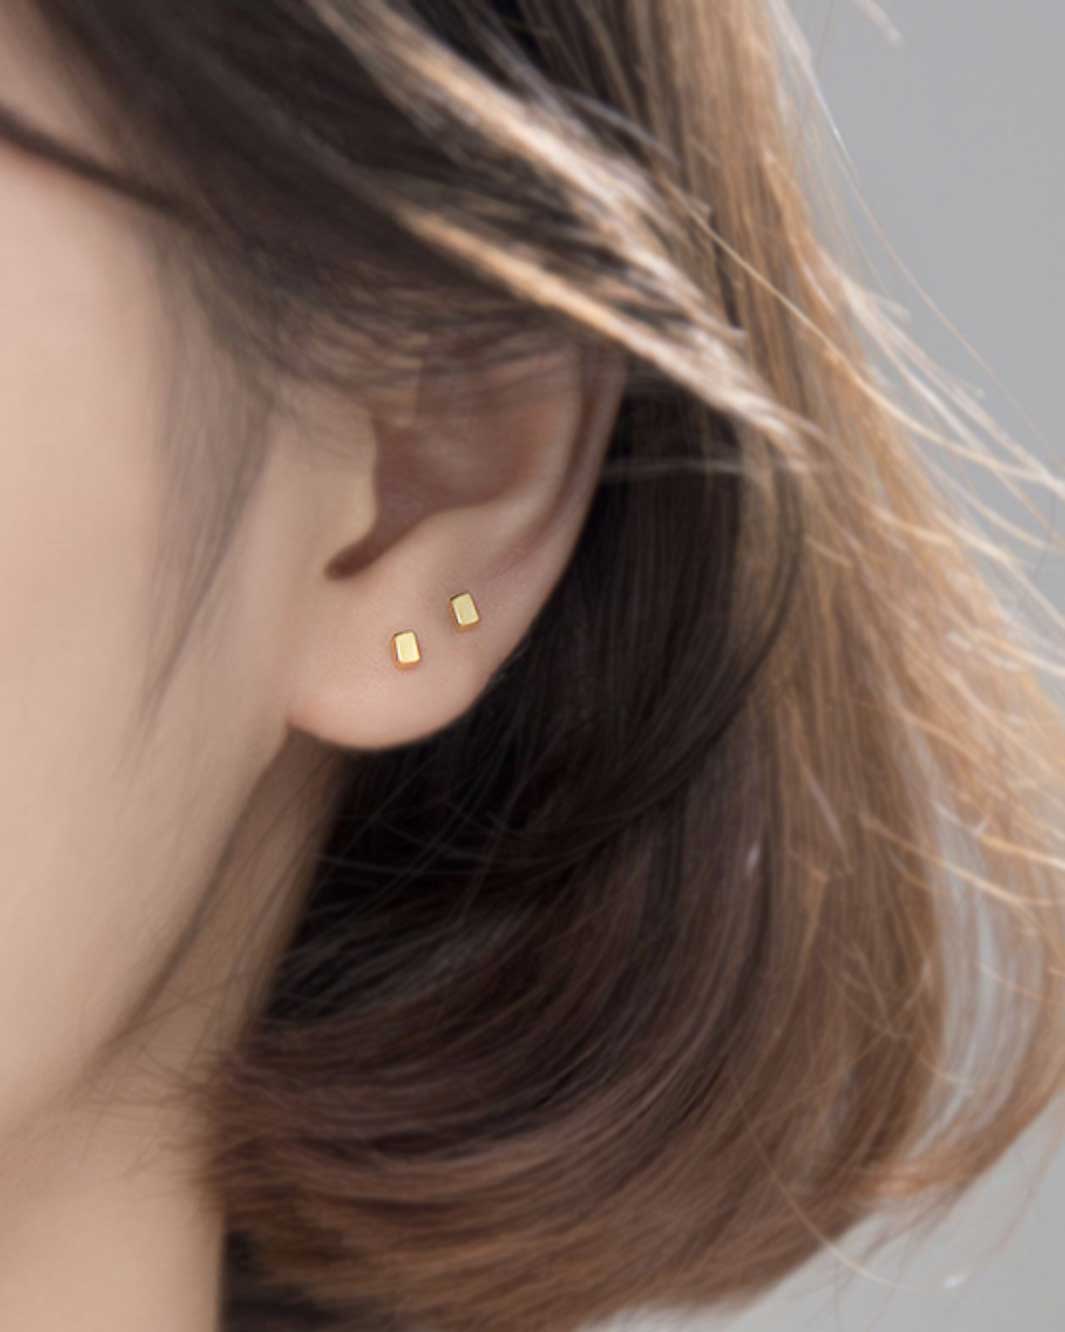 Geometric Shape 3-Pack Stud Earrings